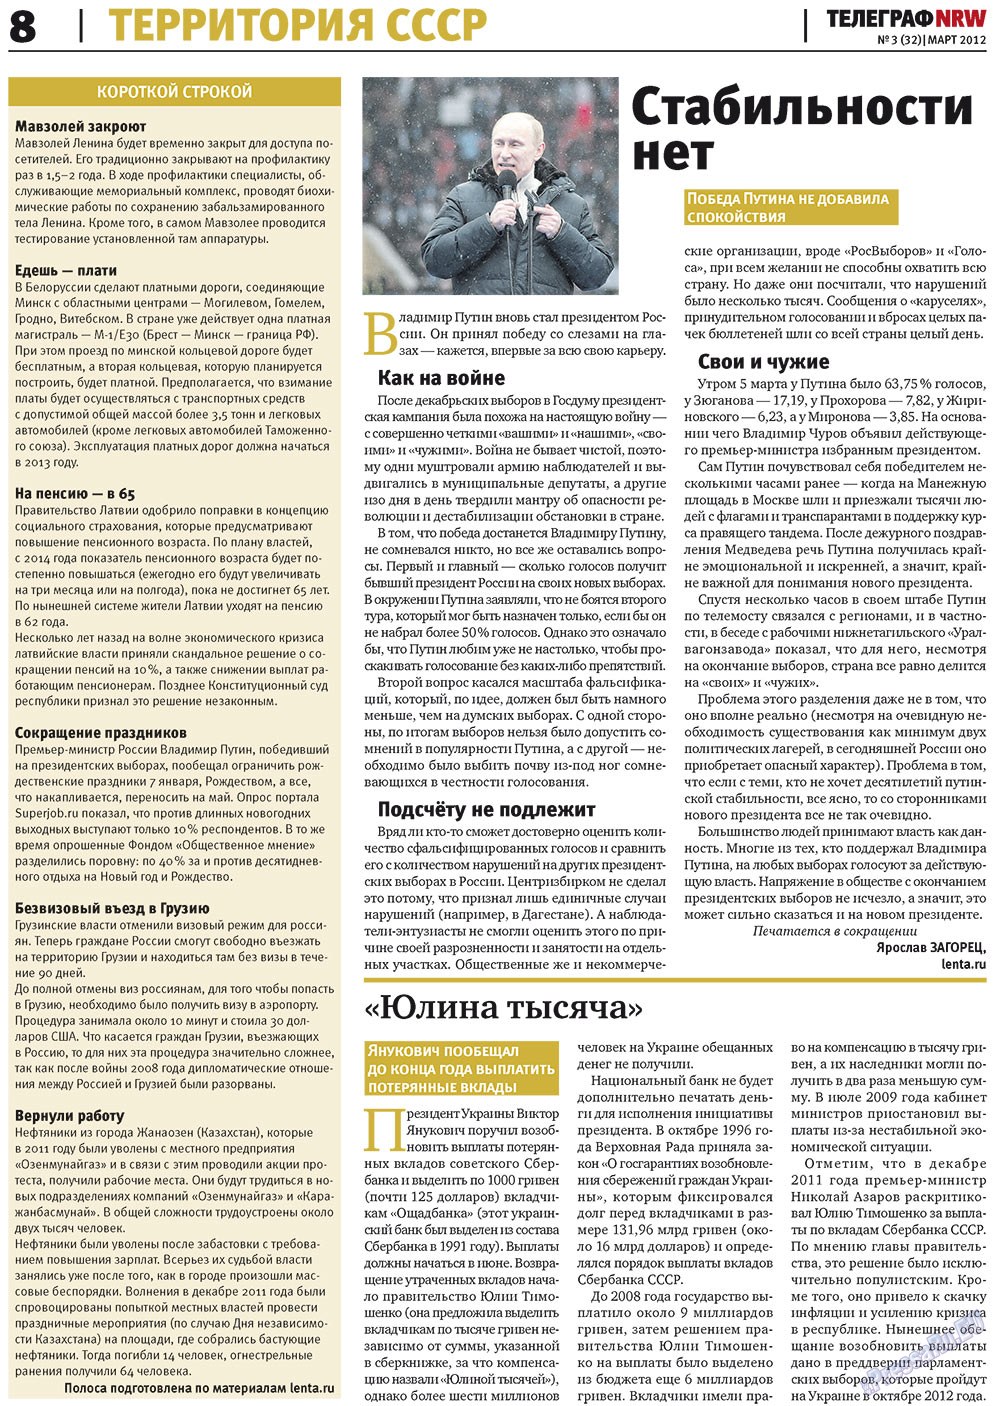 Телеграф NRW, газета. 2012 №3 стр.8